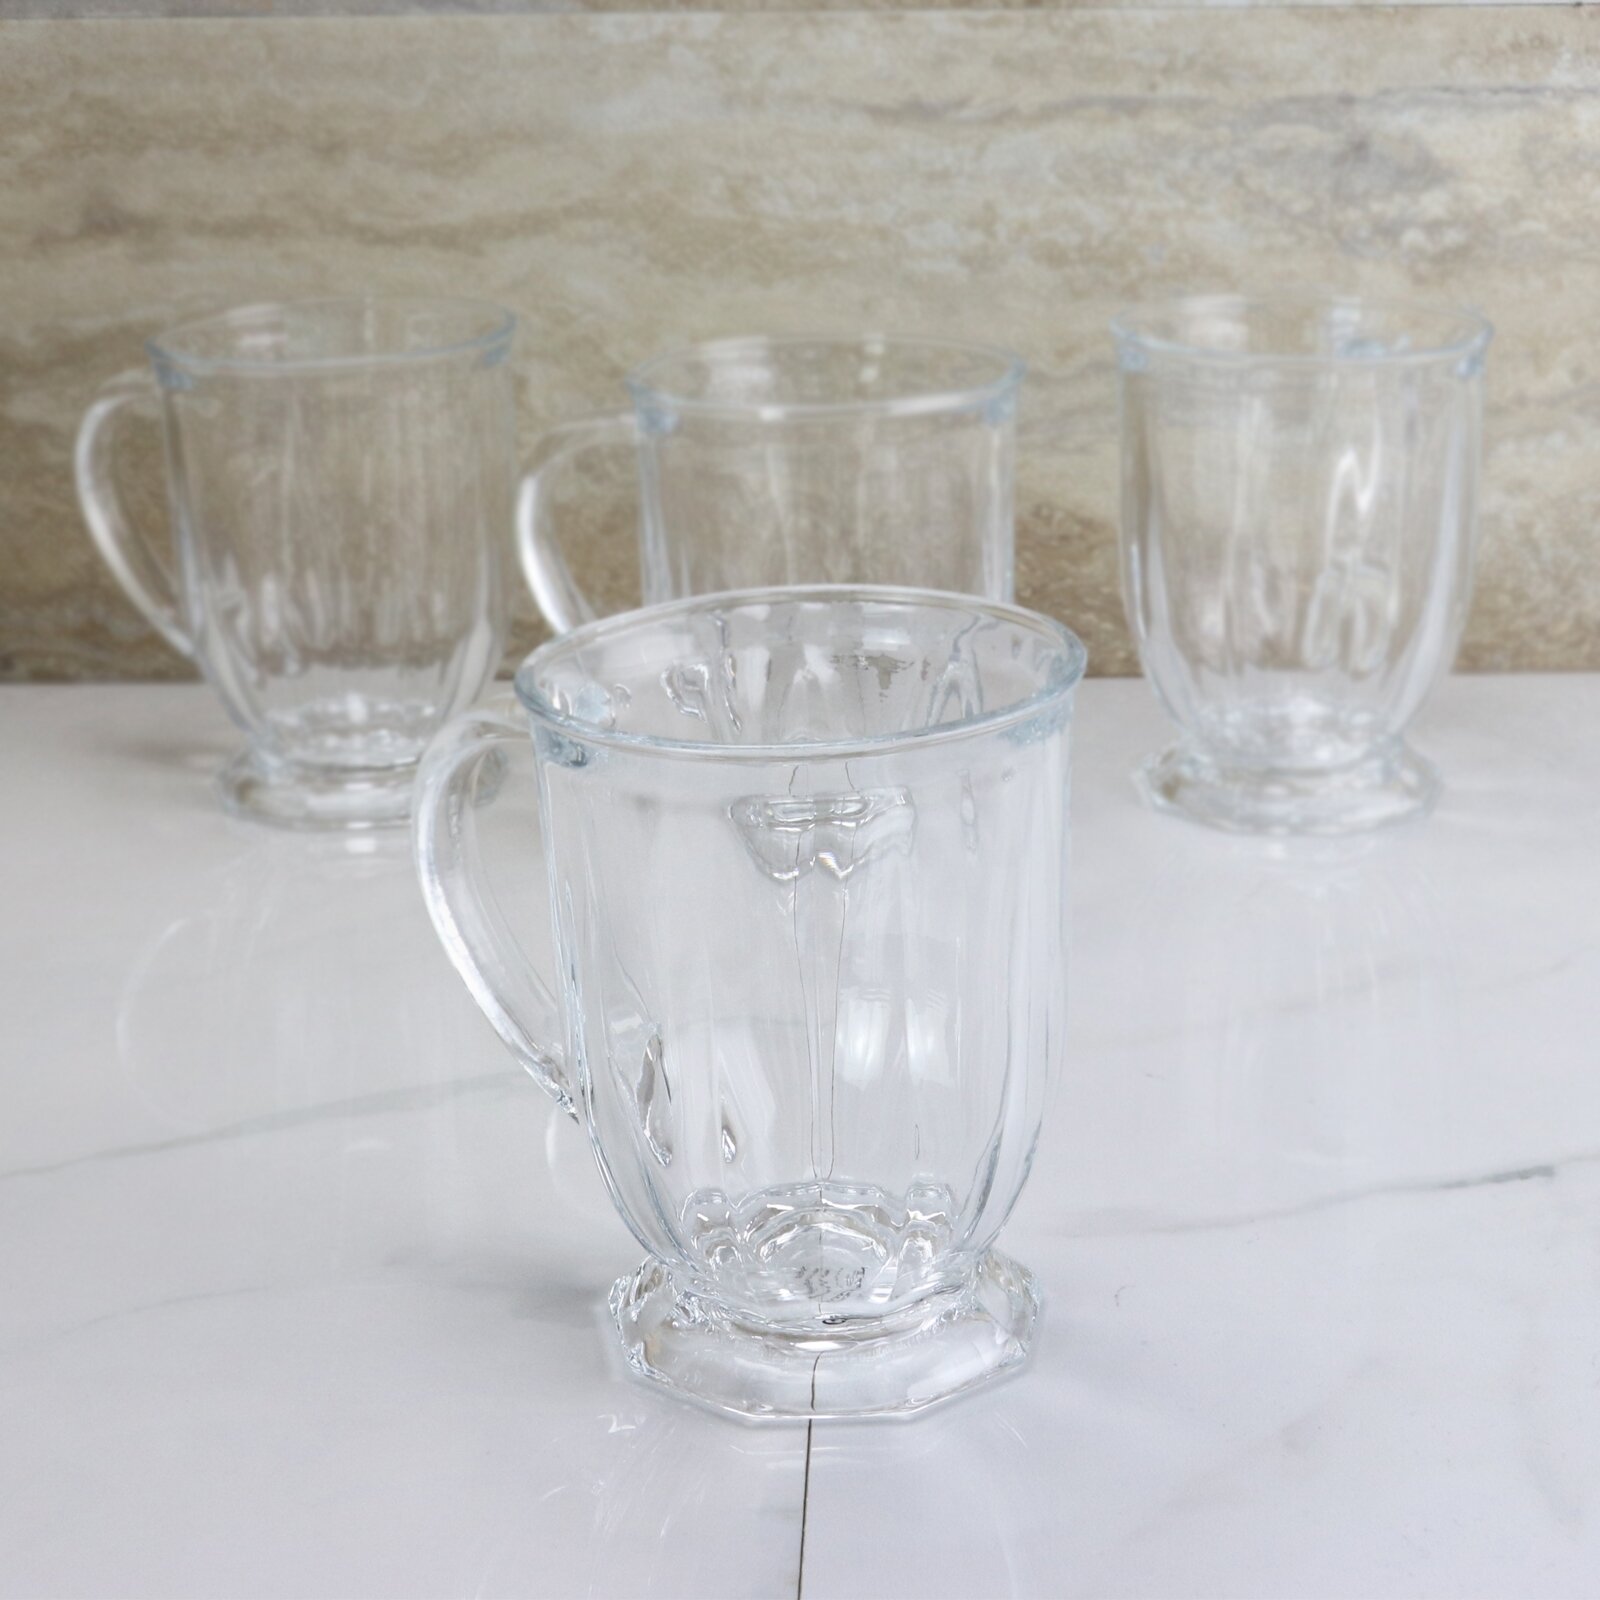 8 oz clear glass coffee mugs